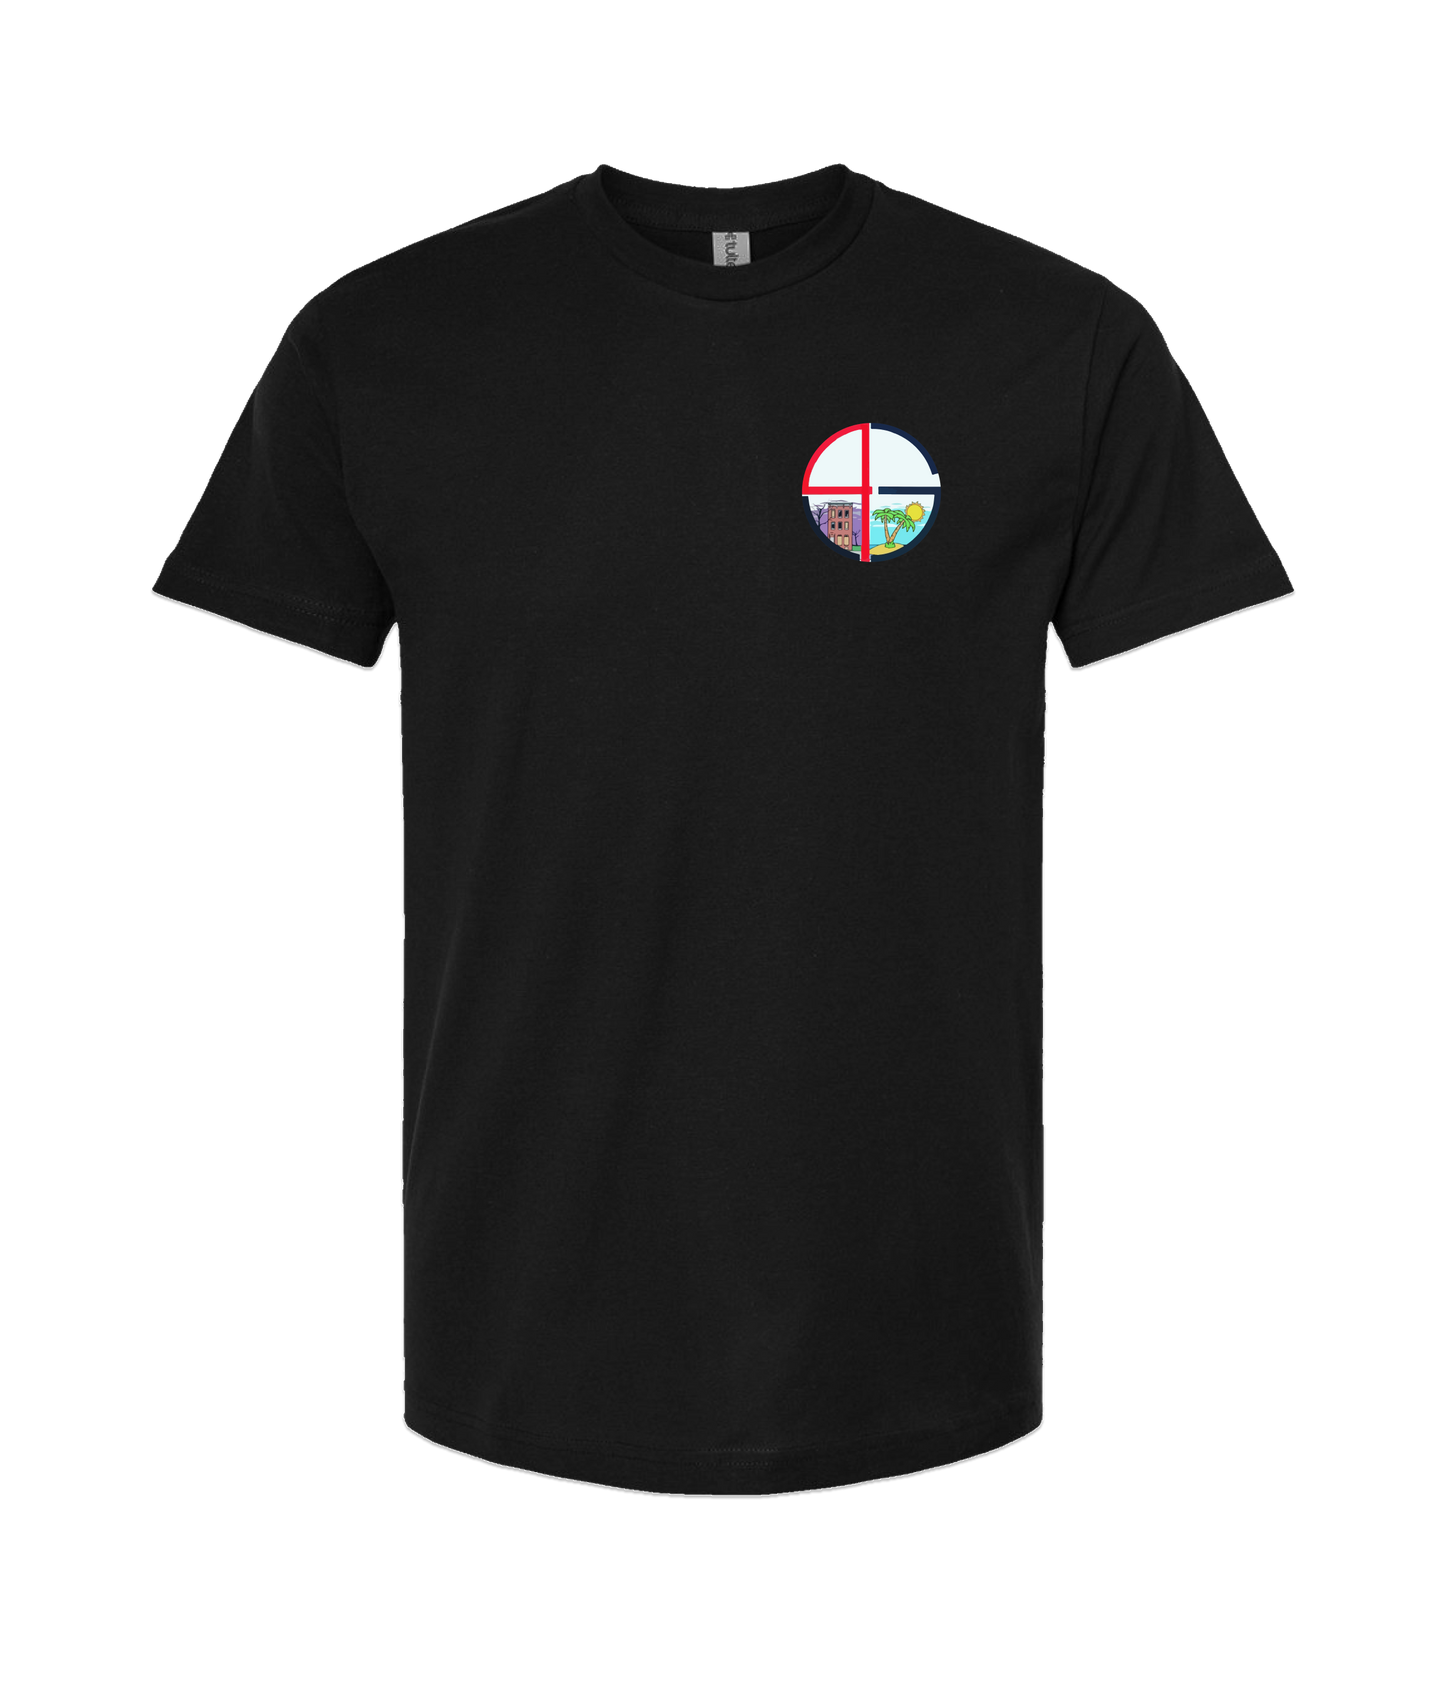 4evaGood - Round Grid - Black T Shirt